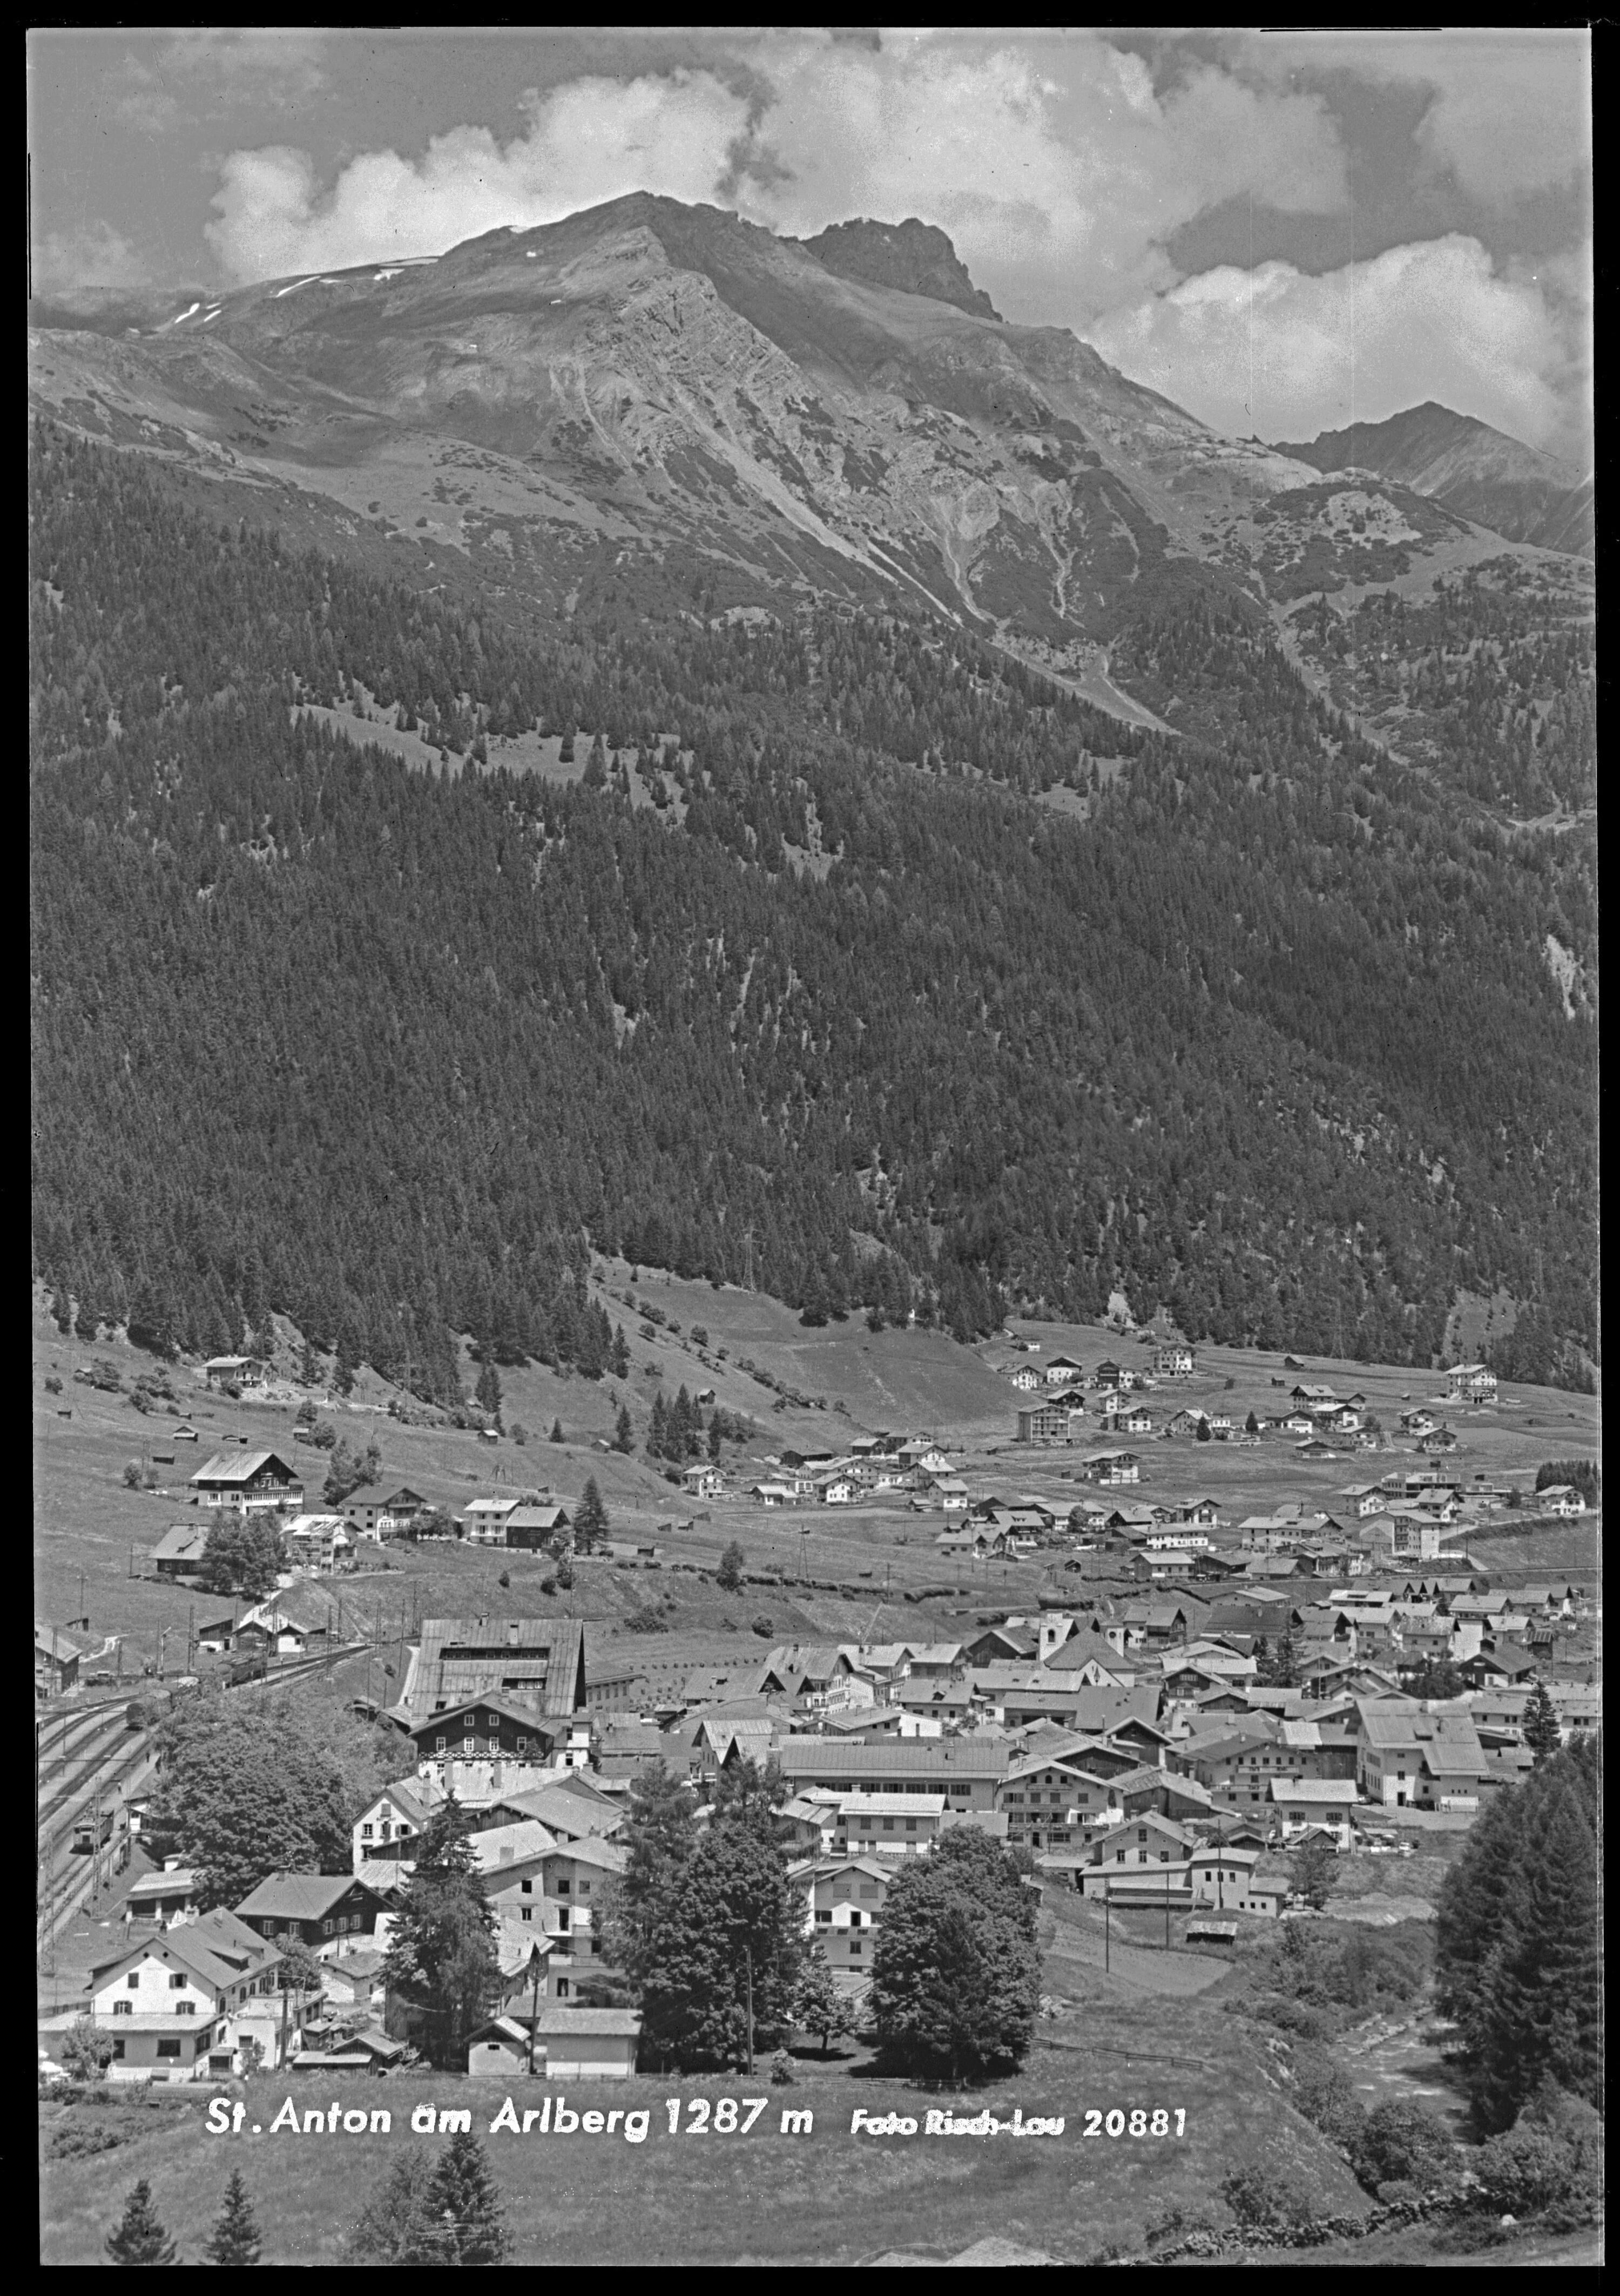 St.Anton am Arlberg 1287 m></div>


    <hr>
    <div class=